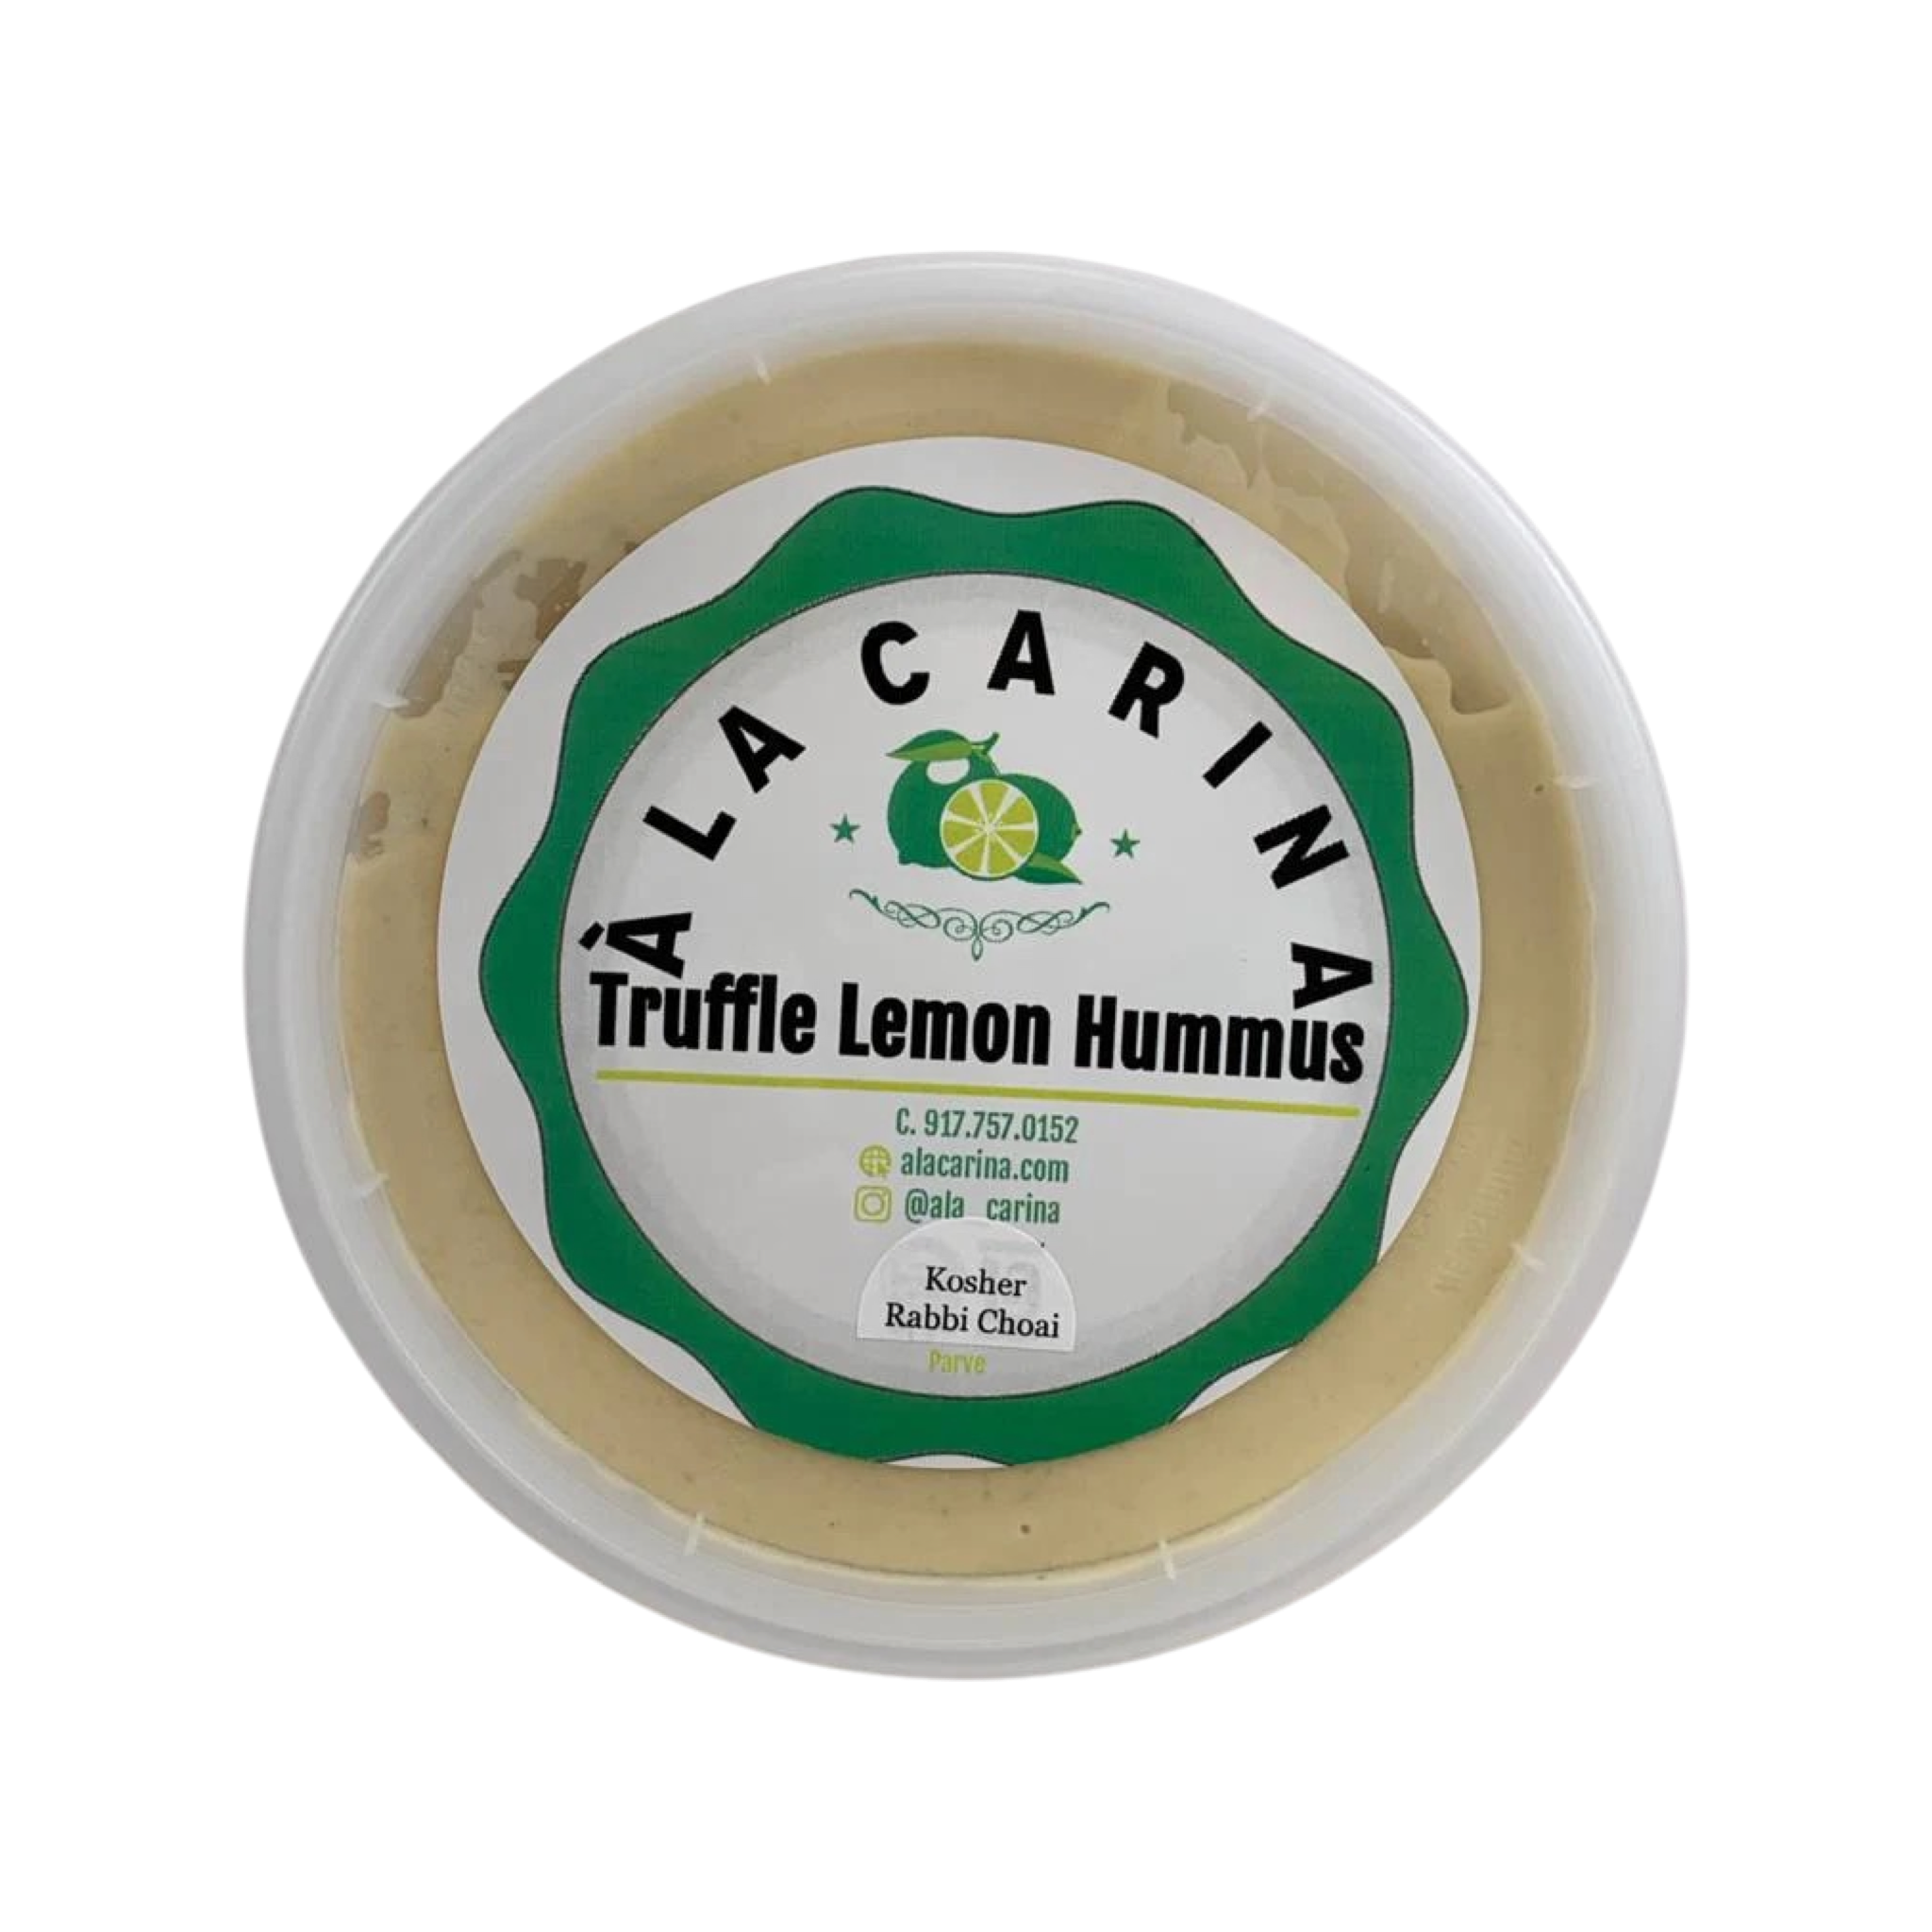 Truffle Lemon Hummus